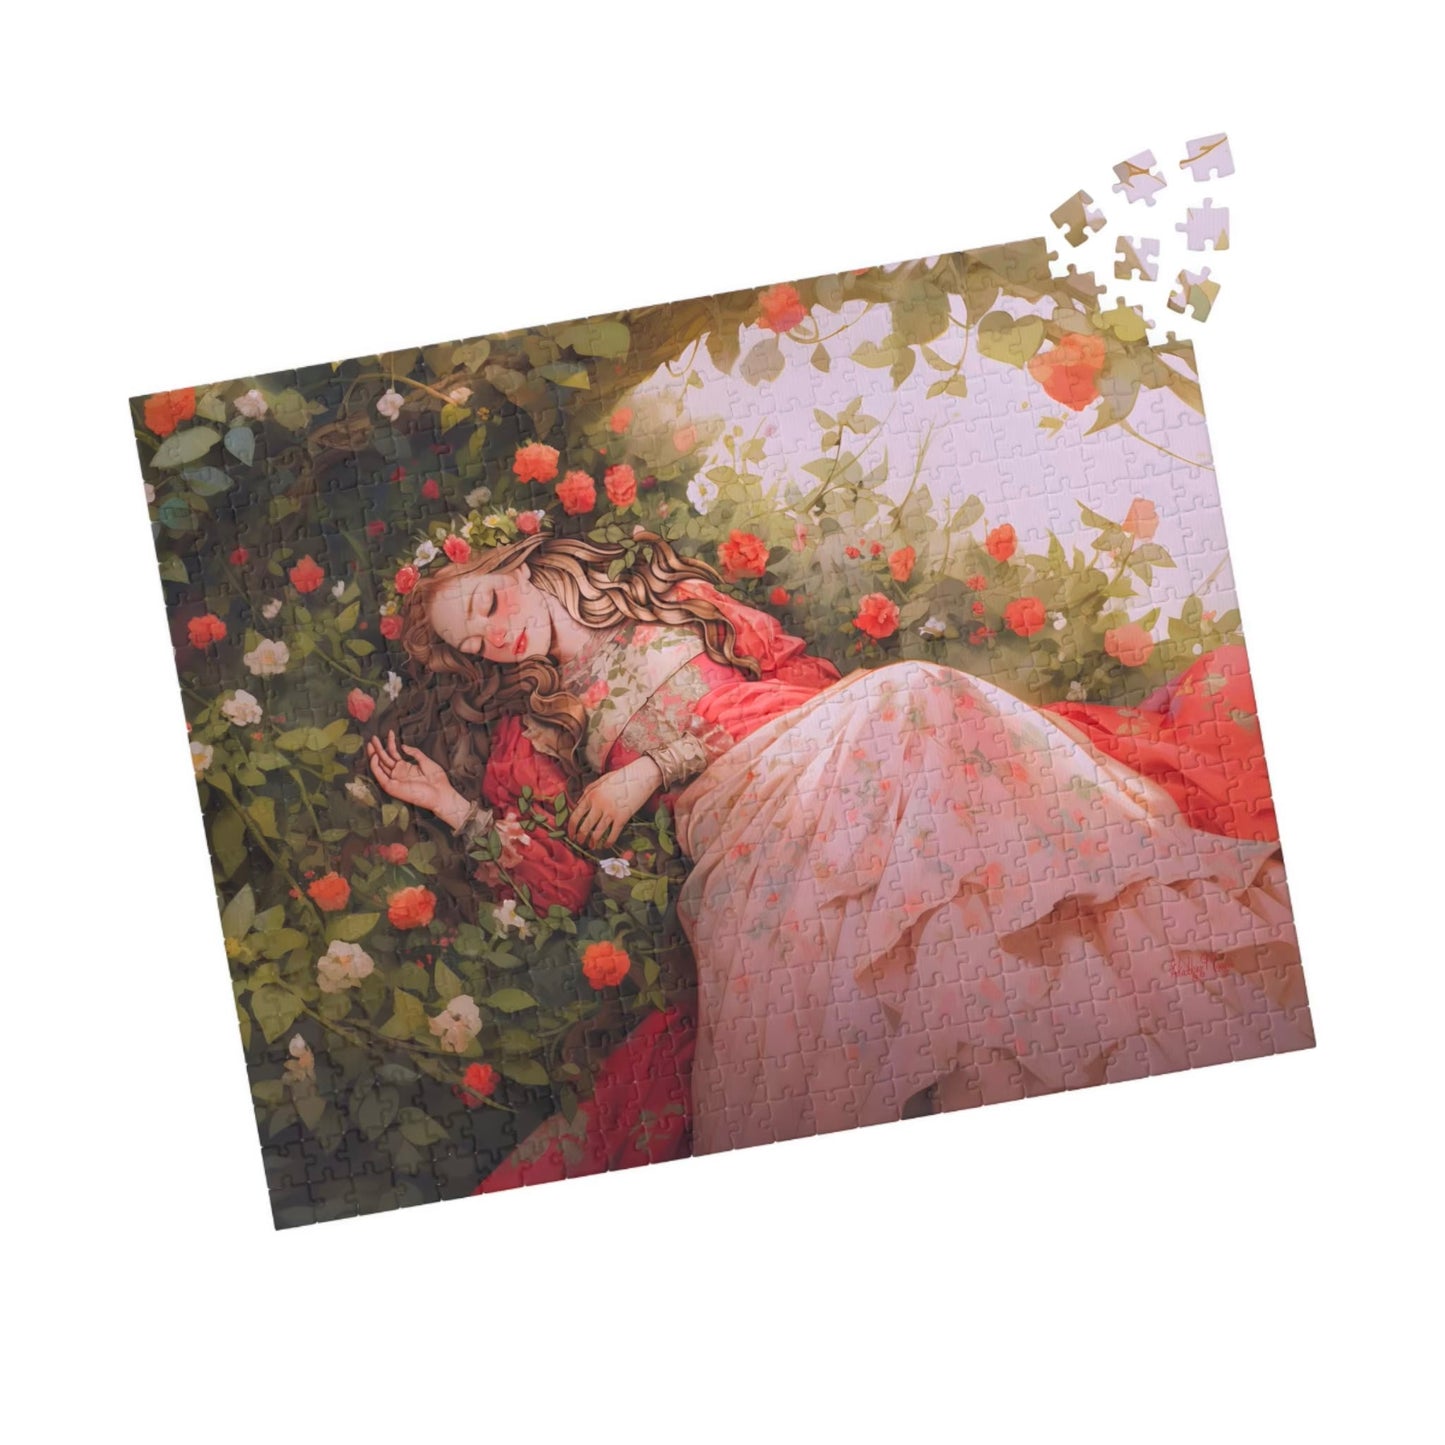 Sleeping Beauty’s Enchanted Slumber | Jigsaw Puzzle